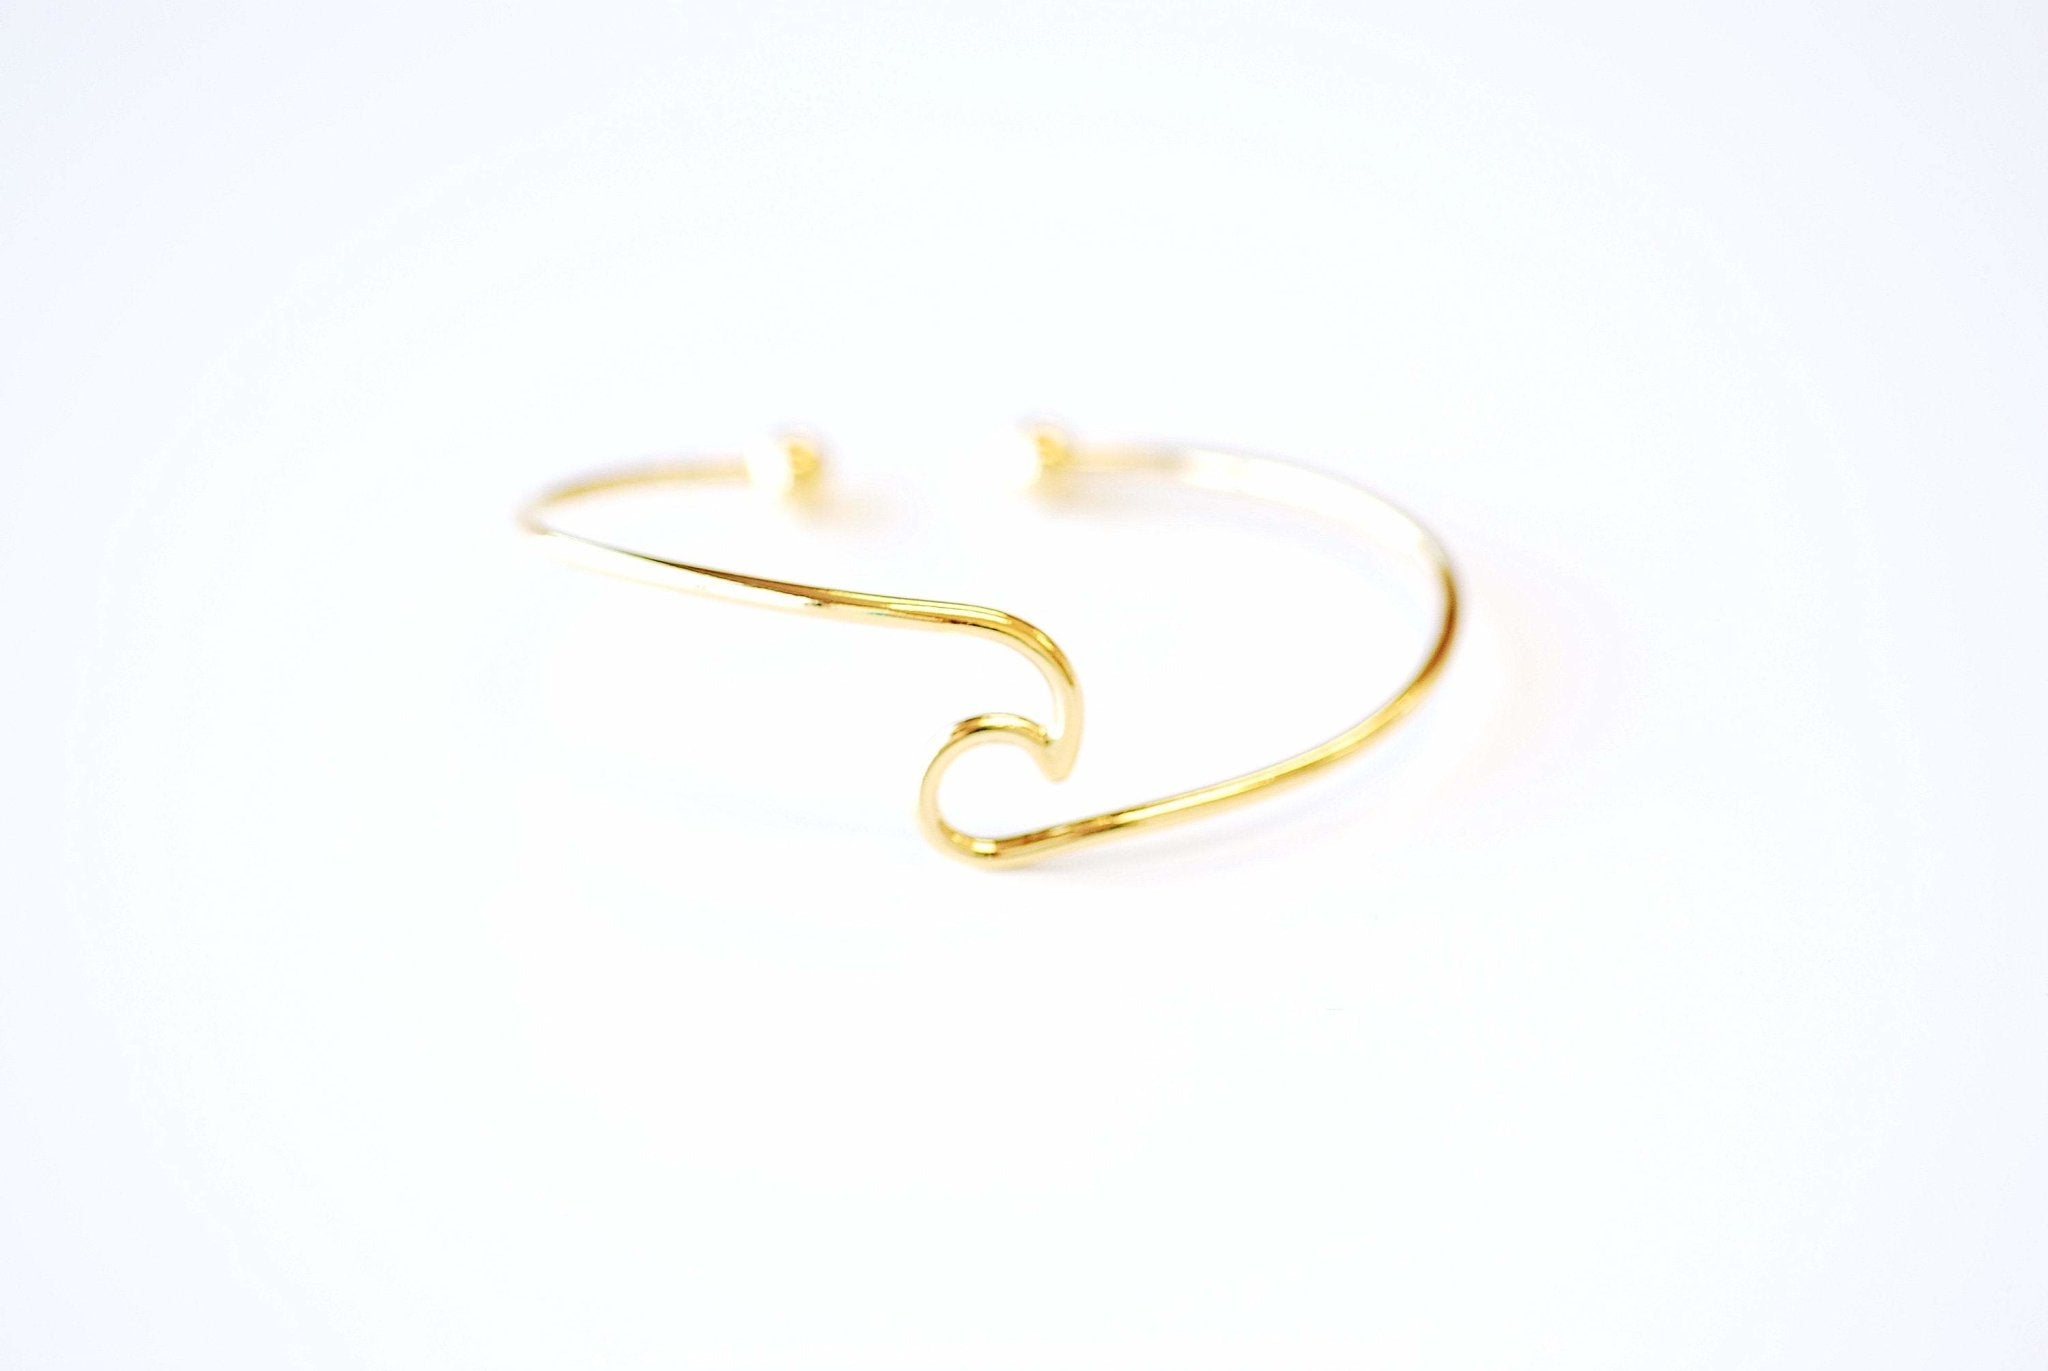 Wave Bracelet - Wave Bangle - 925 Sterling Silver or 18k Gold - Adjustable Wave Bangle- Ocean - Wave - Island Jewelry, Beach Jewelry, 517 - HarperCrown